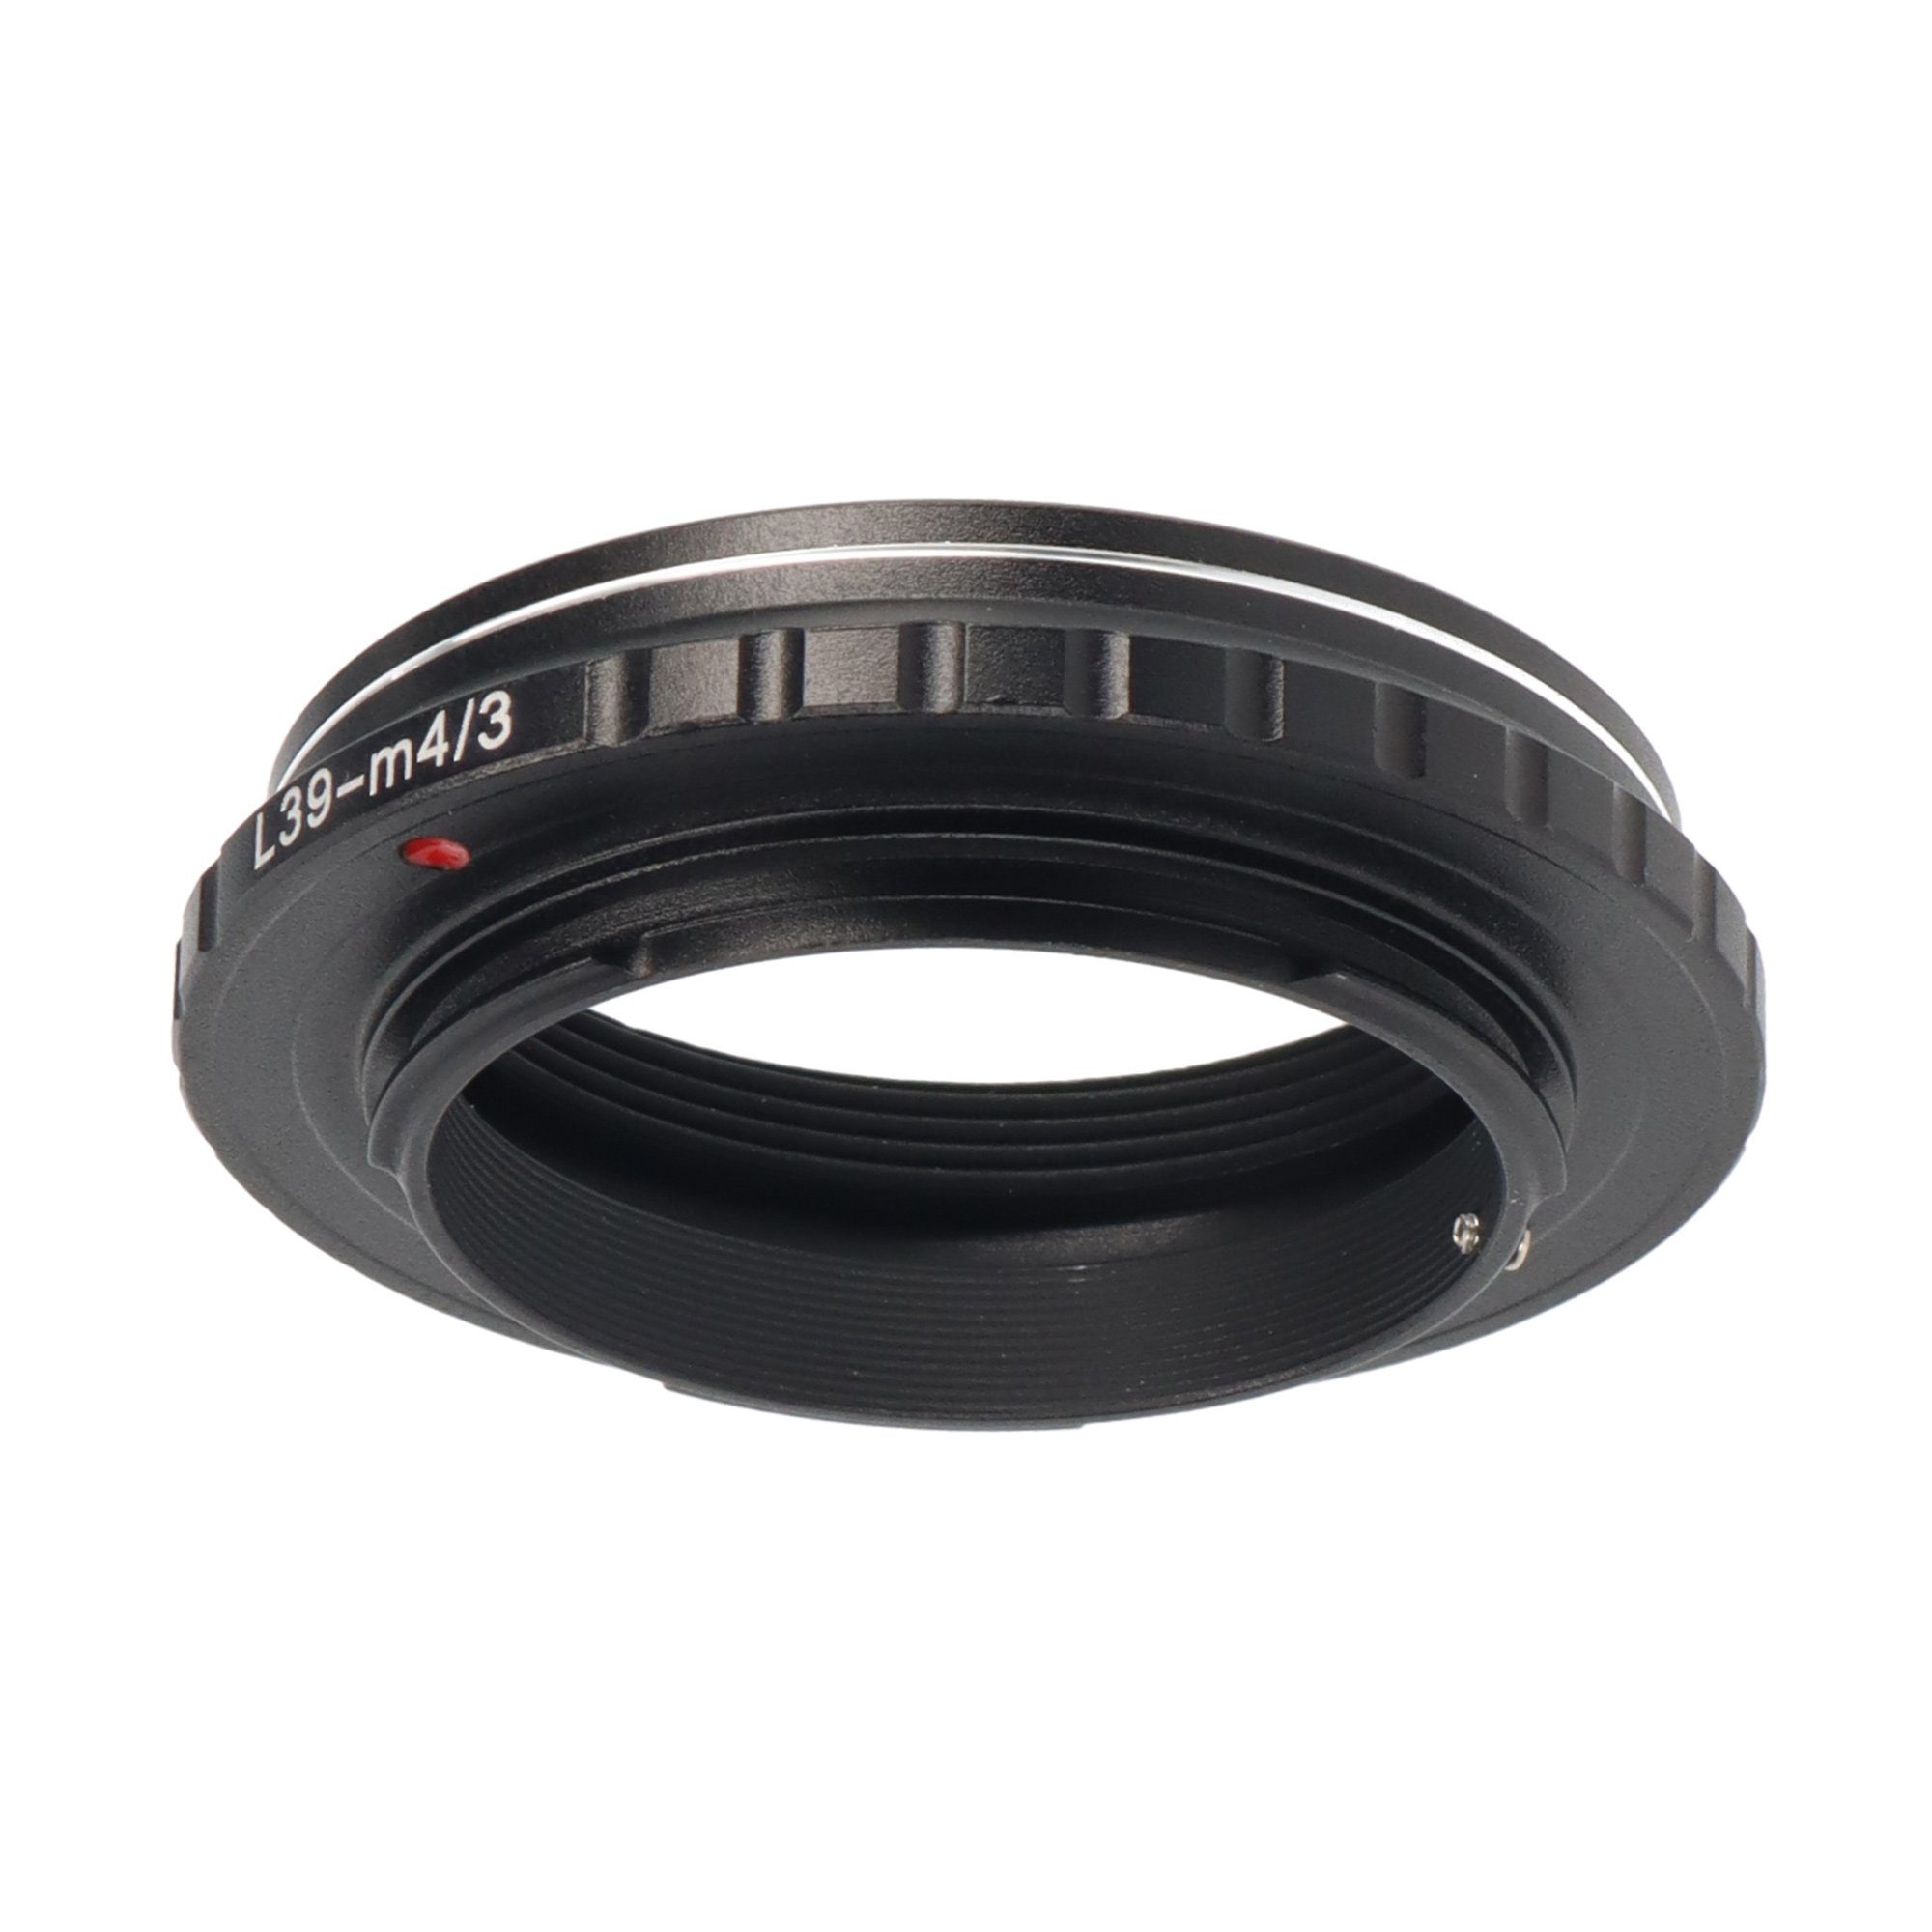 ayex Objektive an Kameras Objektivadapter Objektiveadapter Leica Micro L39 4/3